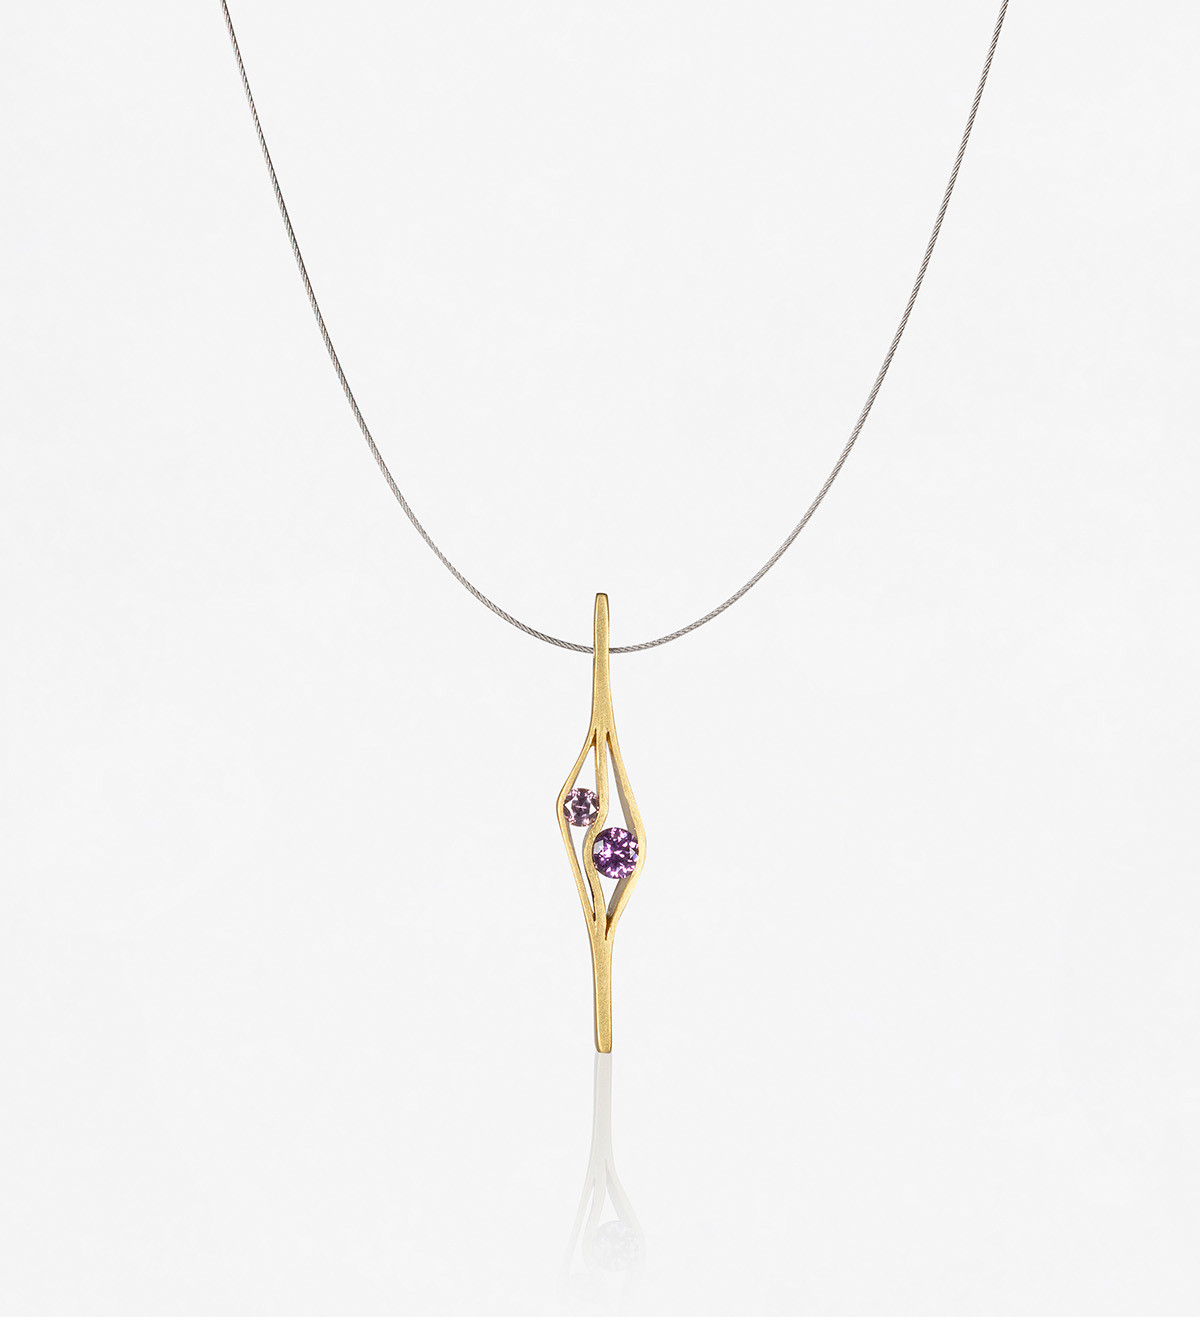 Colgante oro con zafiros lila y rosa Wennick-Lefèvre 0,64ct